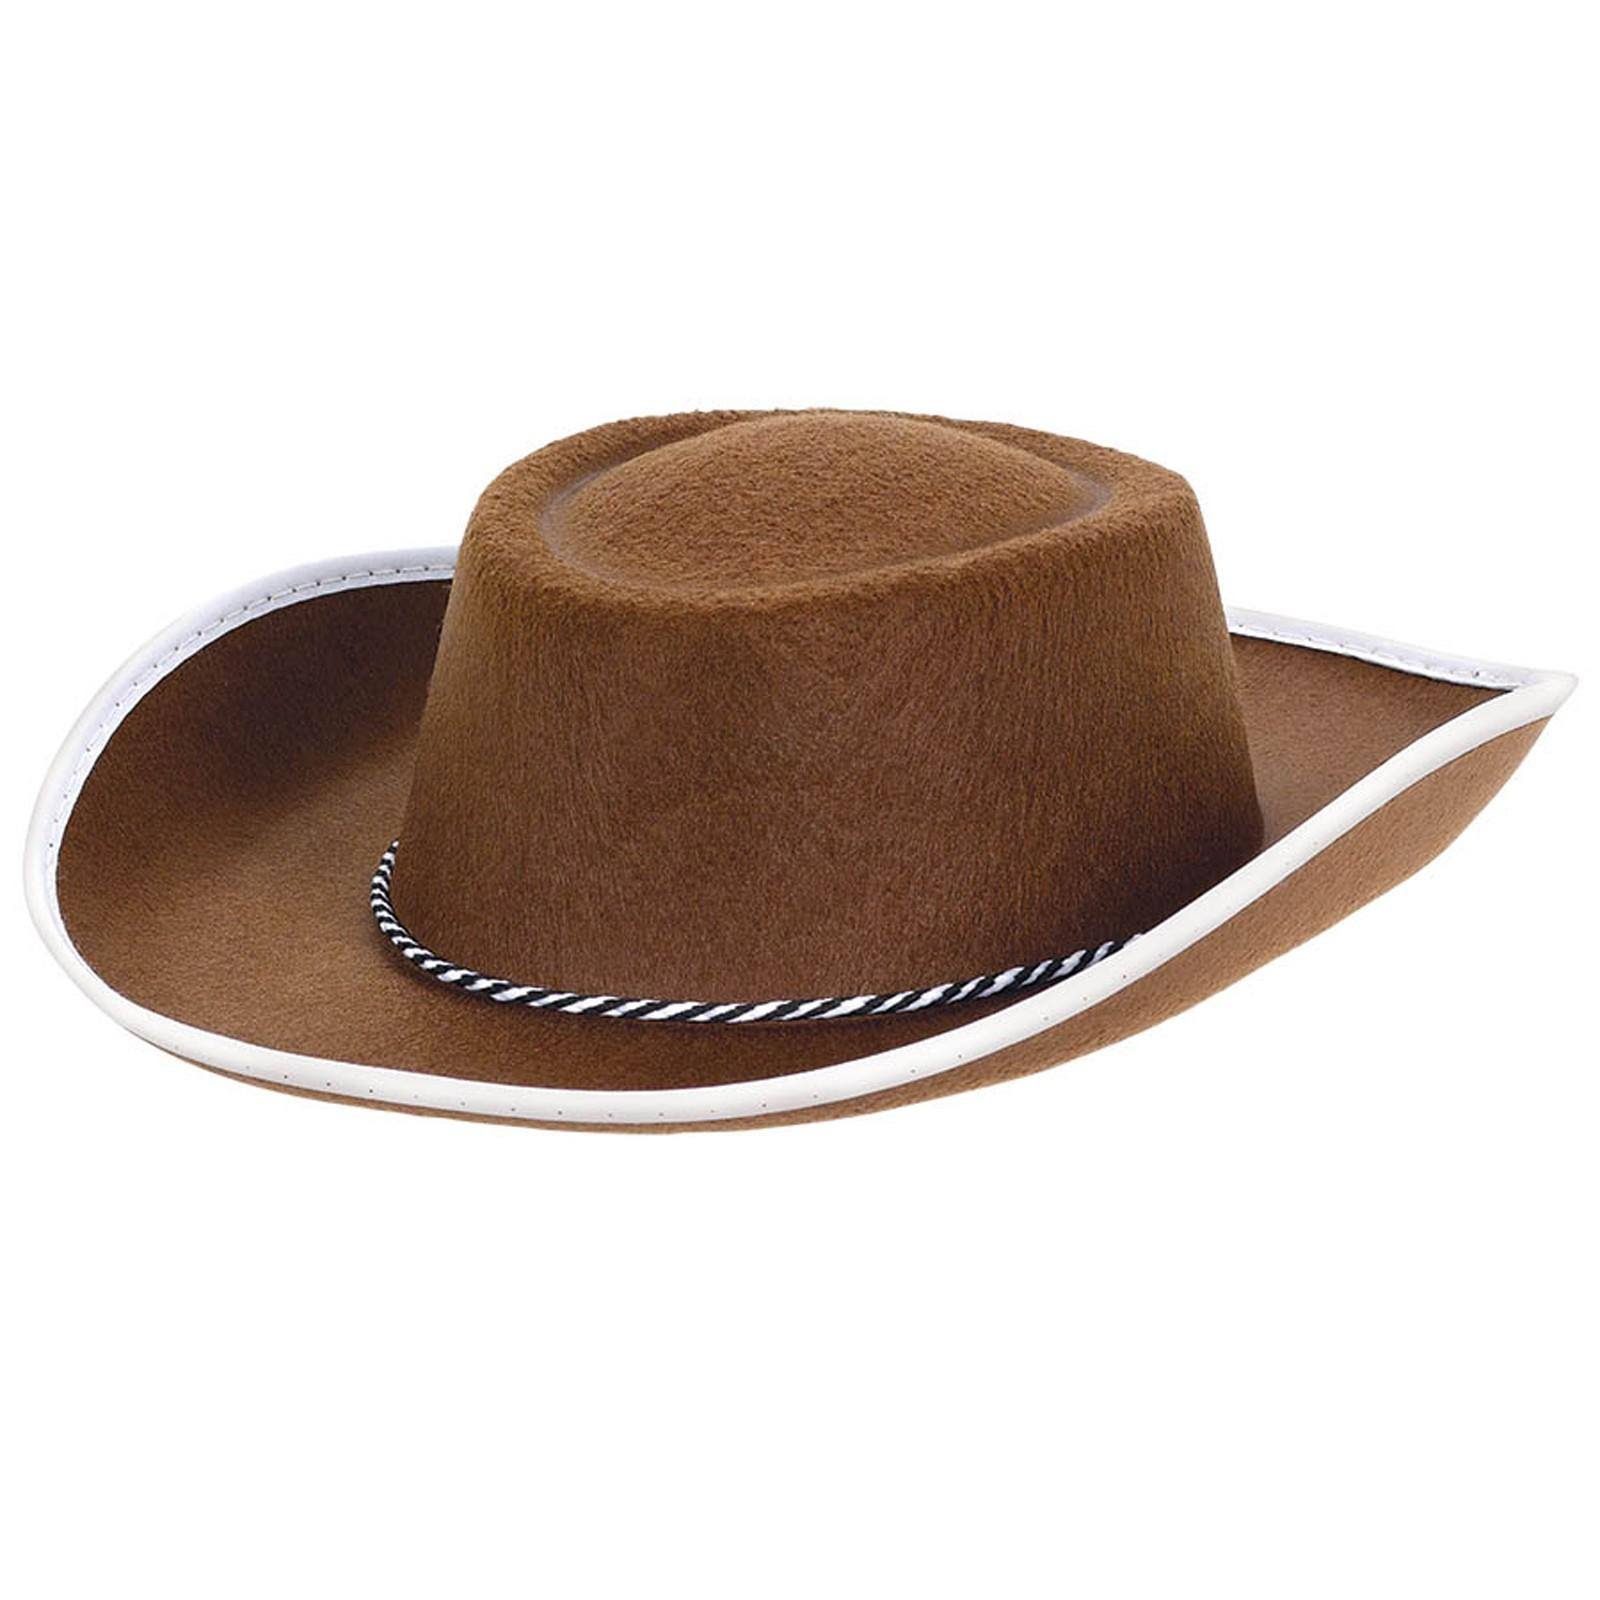 Amscan Child's Brown Cowboy Hat